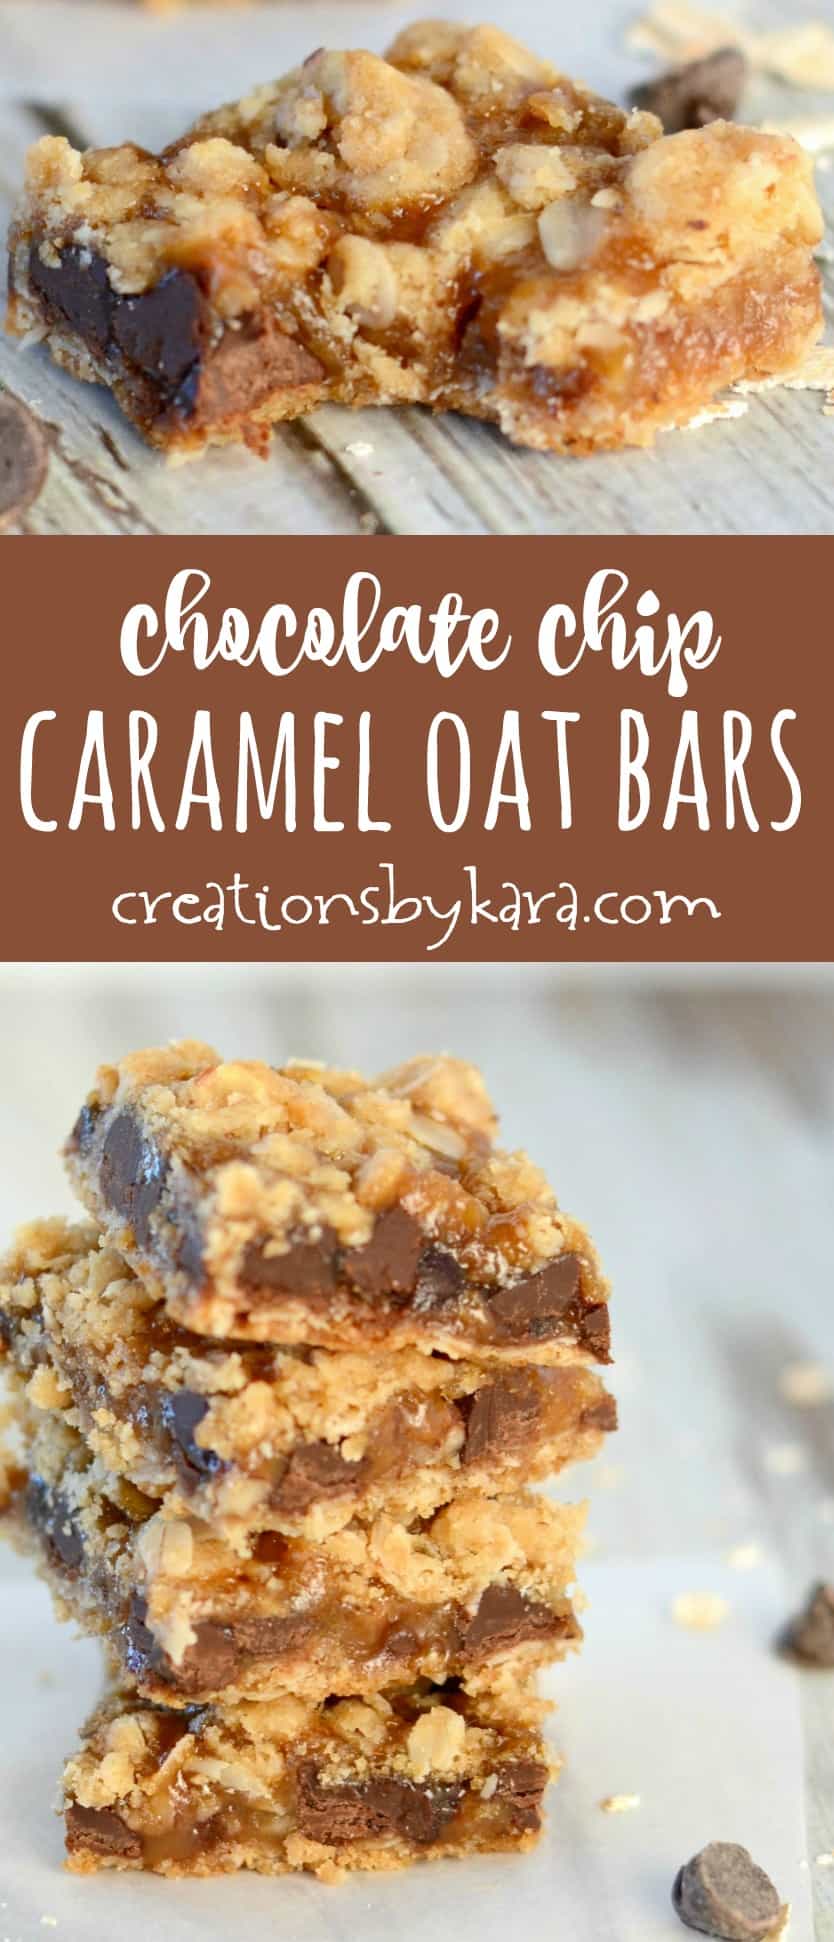 Chocolate chip caramel oatmeal bars